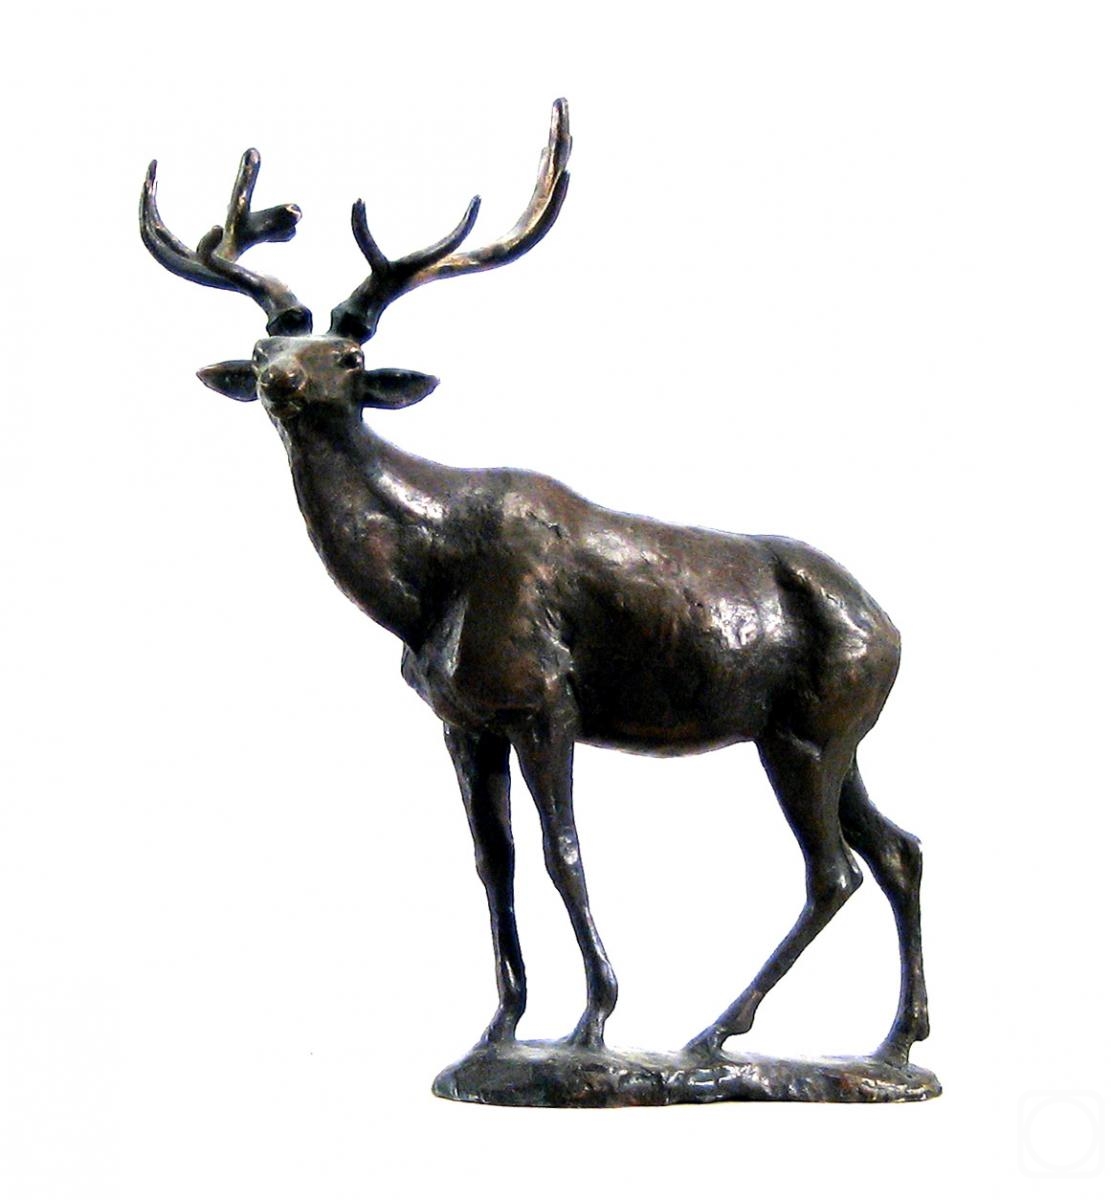 Potlov Vladimir. Deer